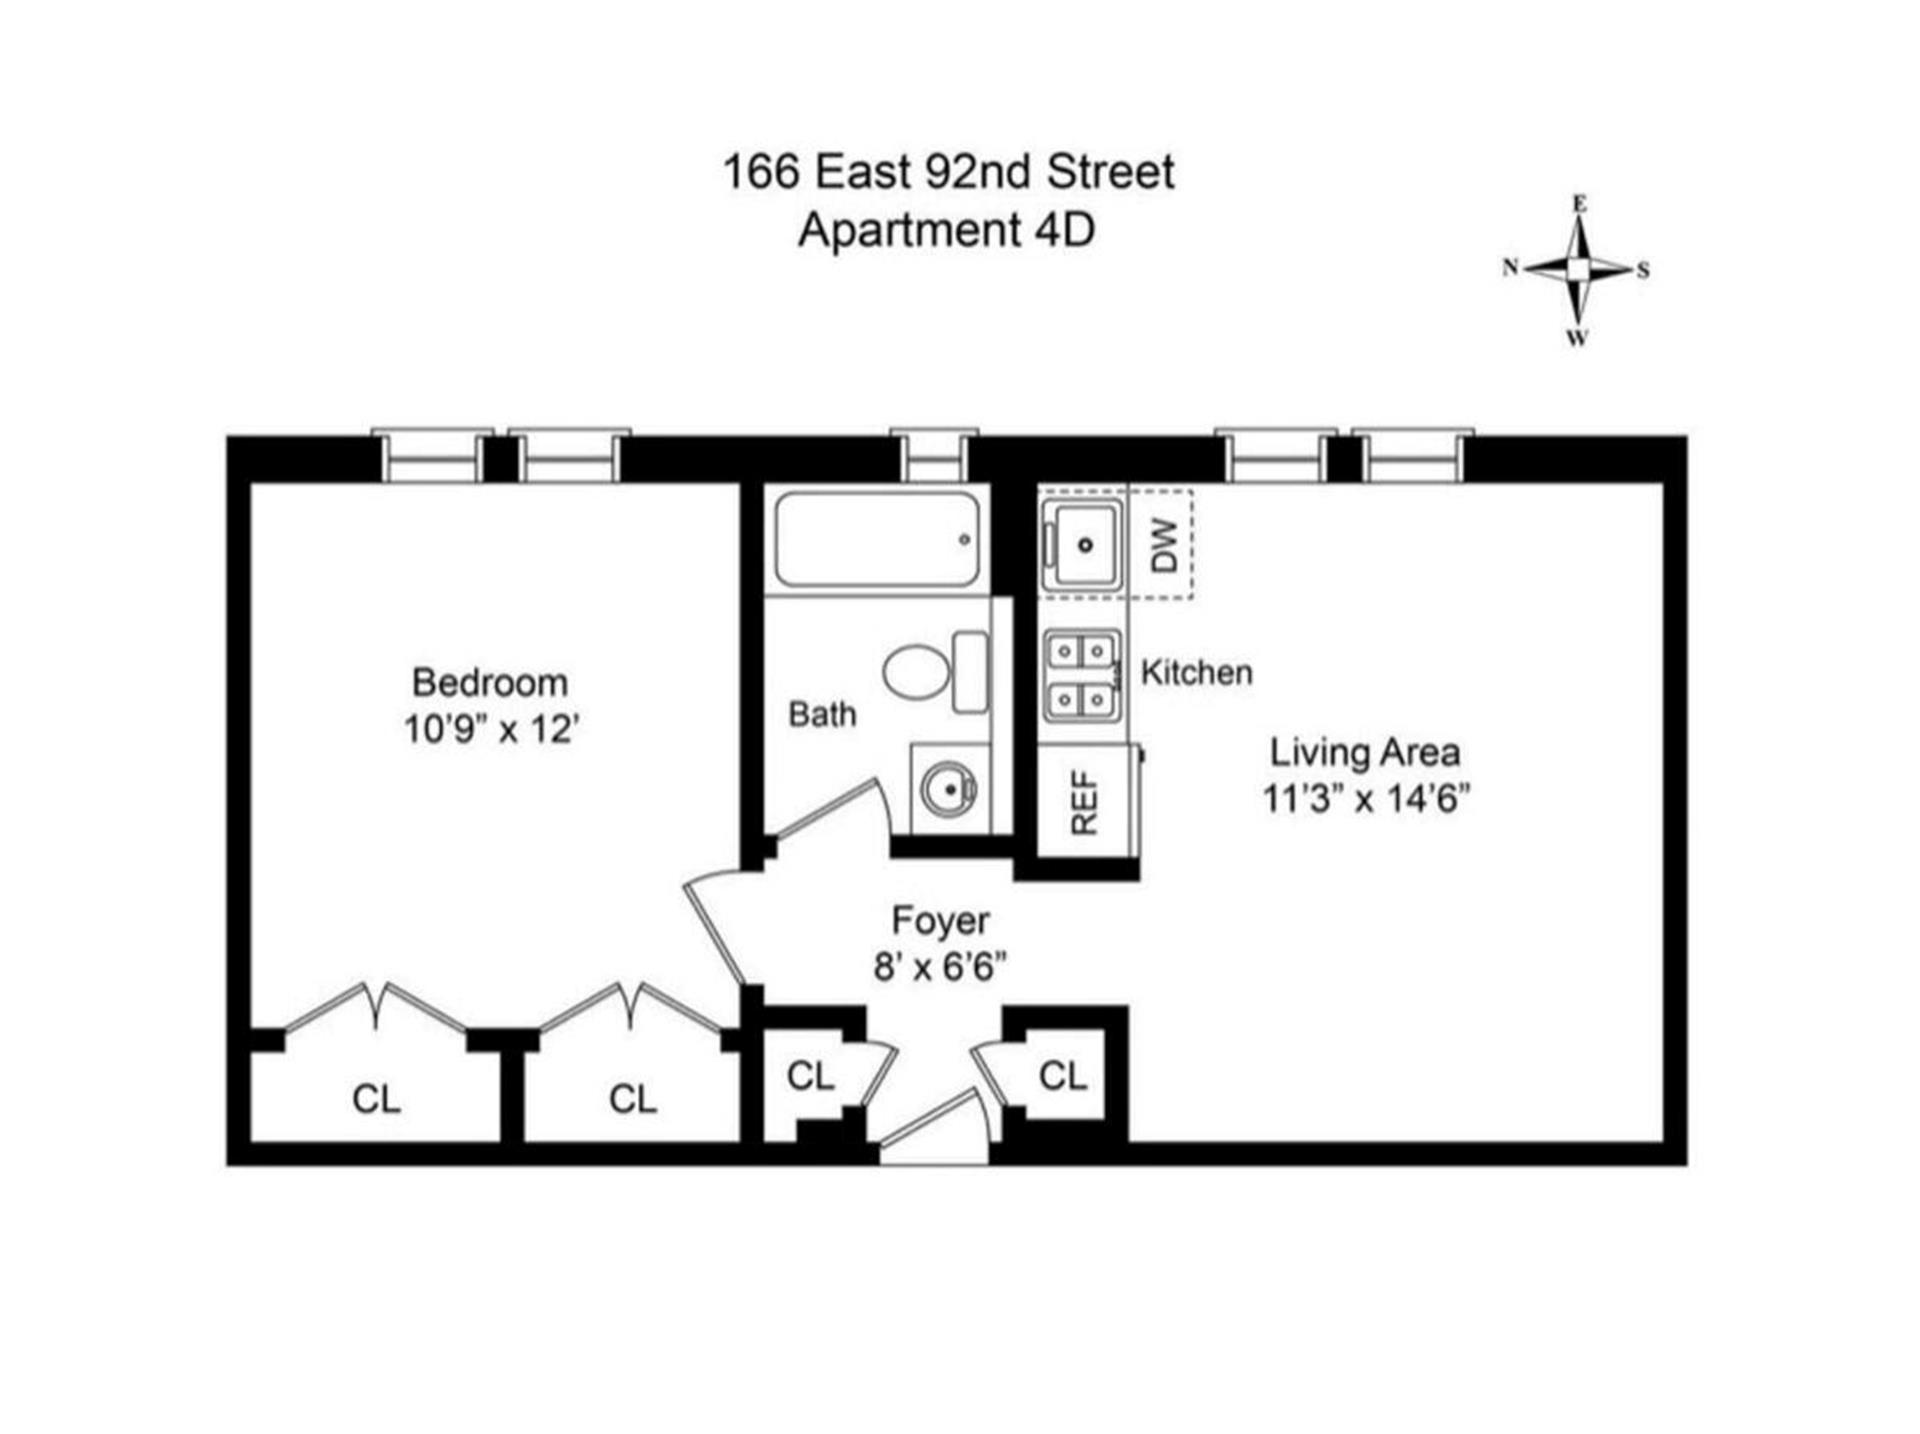 Floorplan for 166 East 92nd Street, 4D